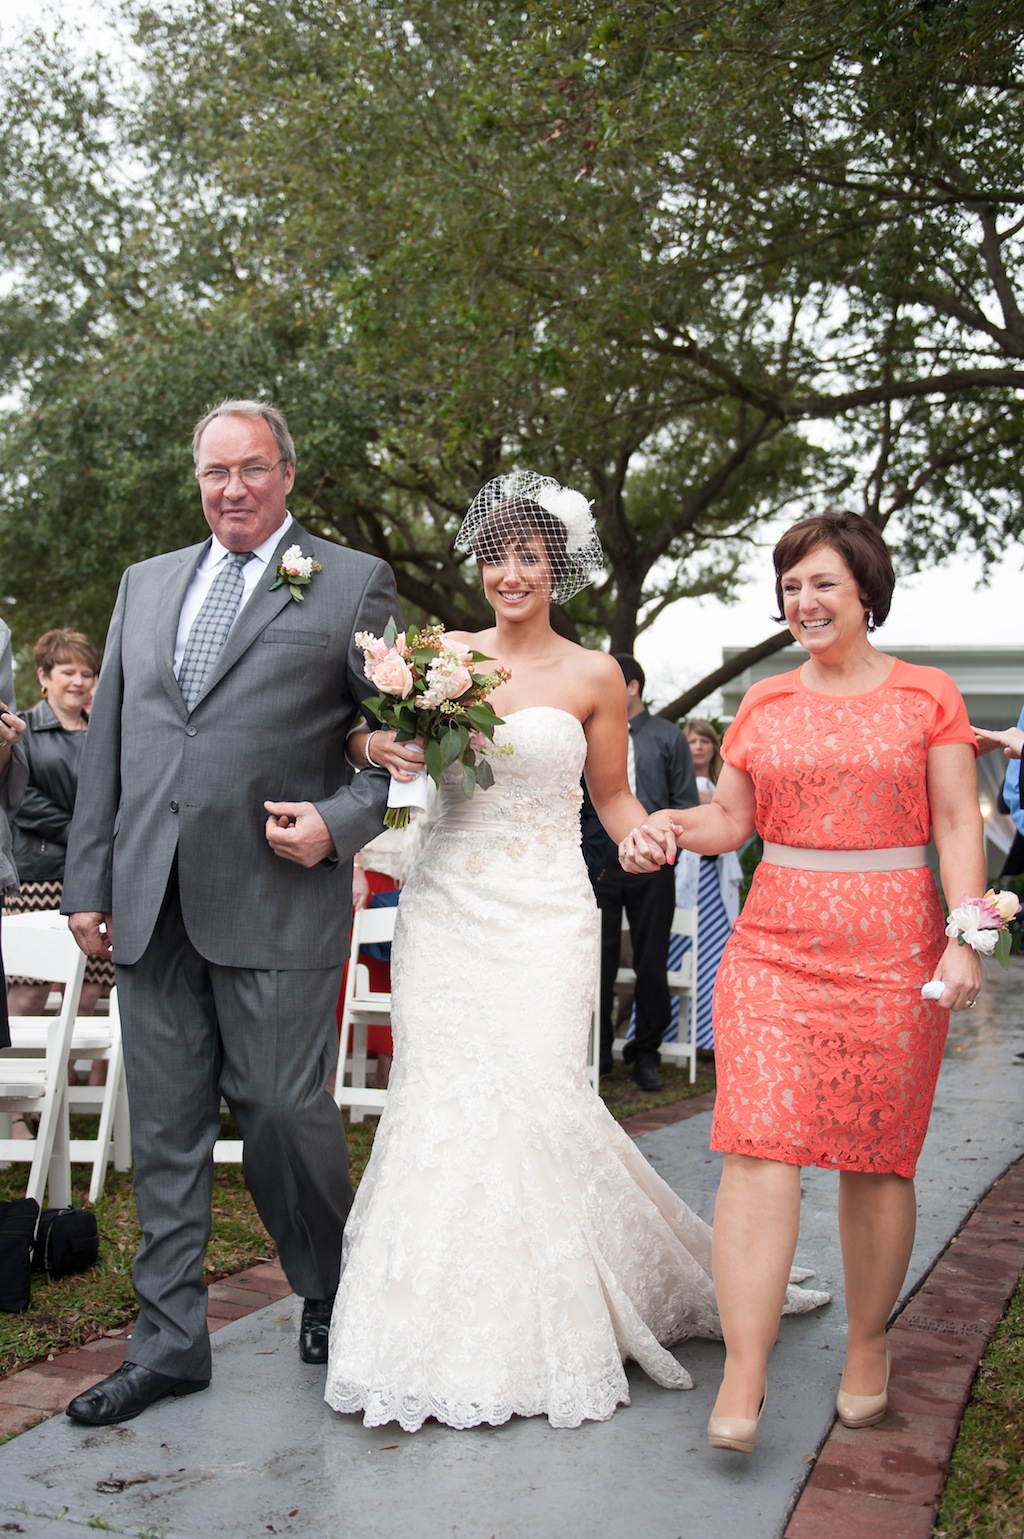 Davis Island Garden Club Wedding - Coral and Mint Green Natural Wedding - Tampa Wedding Photographer Sarah & Ben (23)